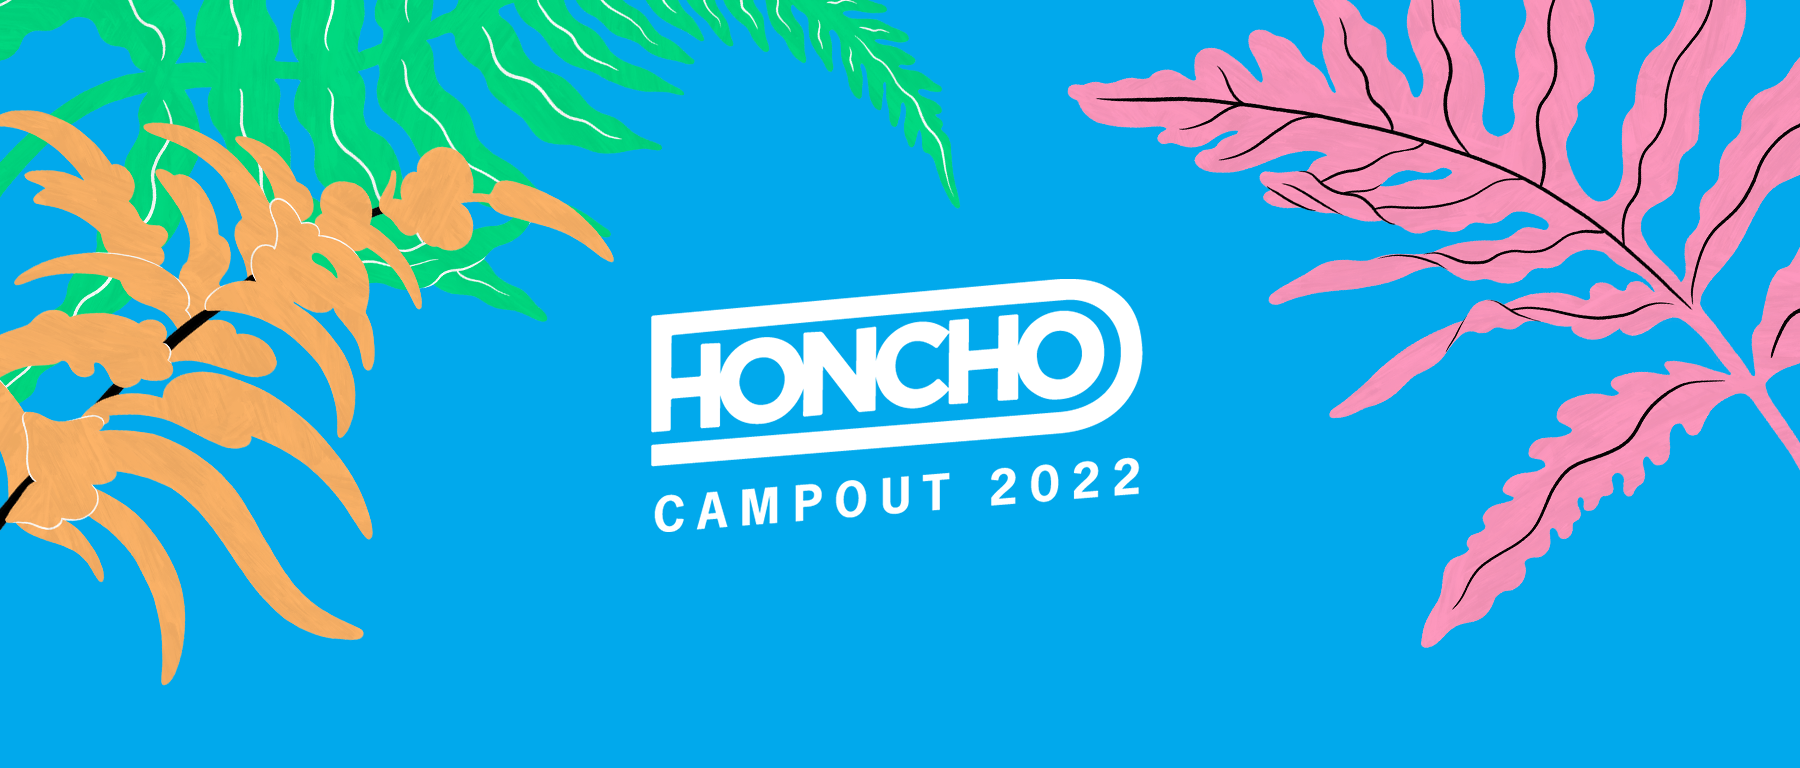 Honcho Campout 2022 - フライヤー表